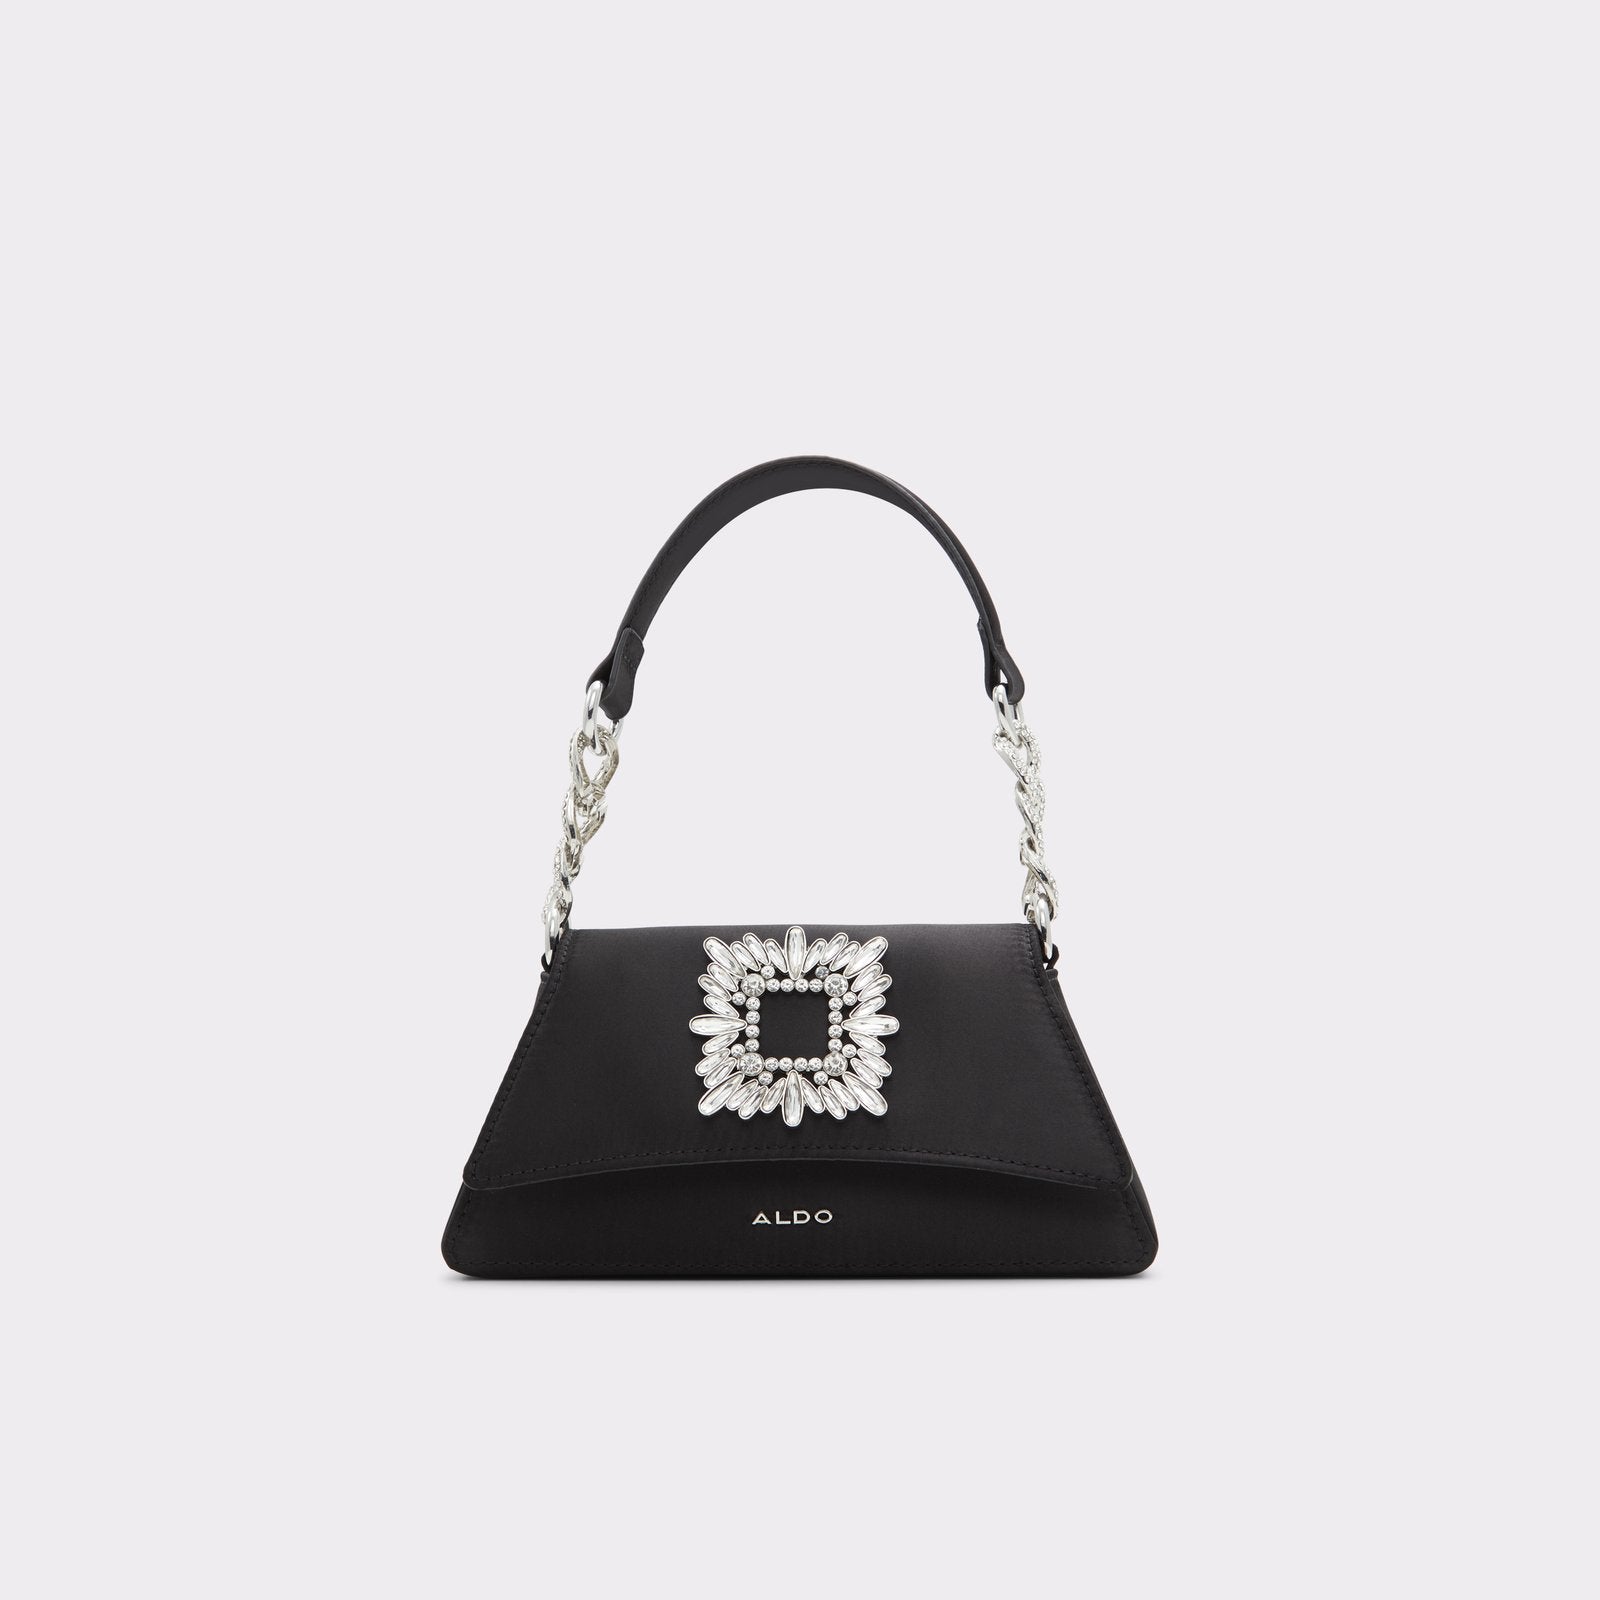 ALDO handbag | Aldo handbags, Bags, Fancy bags